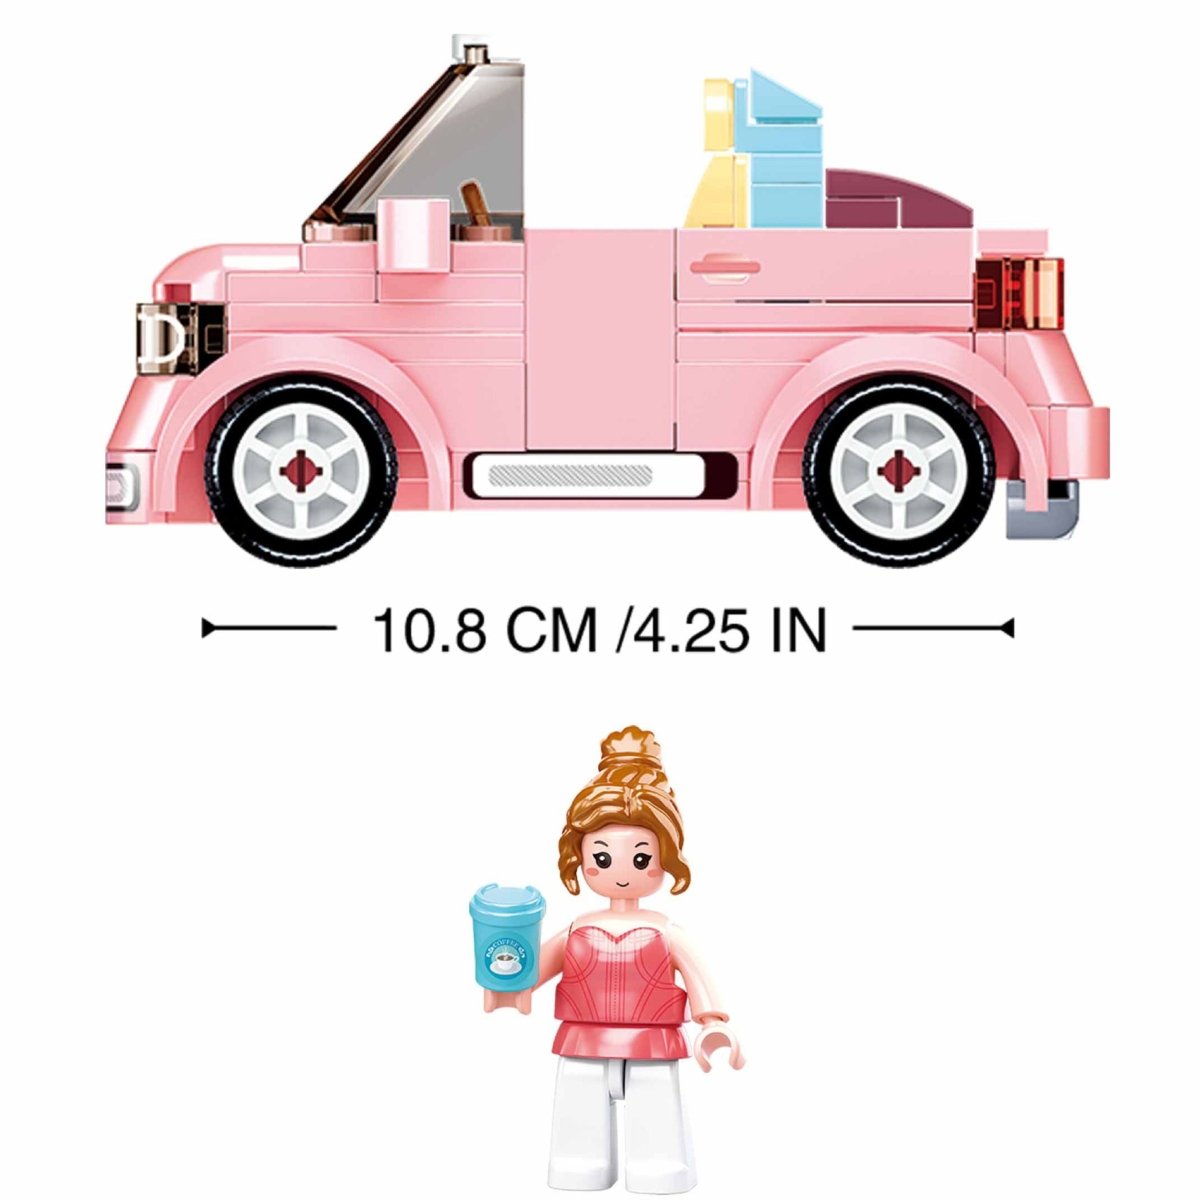 SLUBAN®Building Blocks Kit for Girls -Open Topped Car - M38-B1086